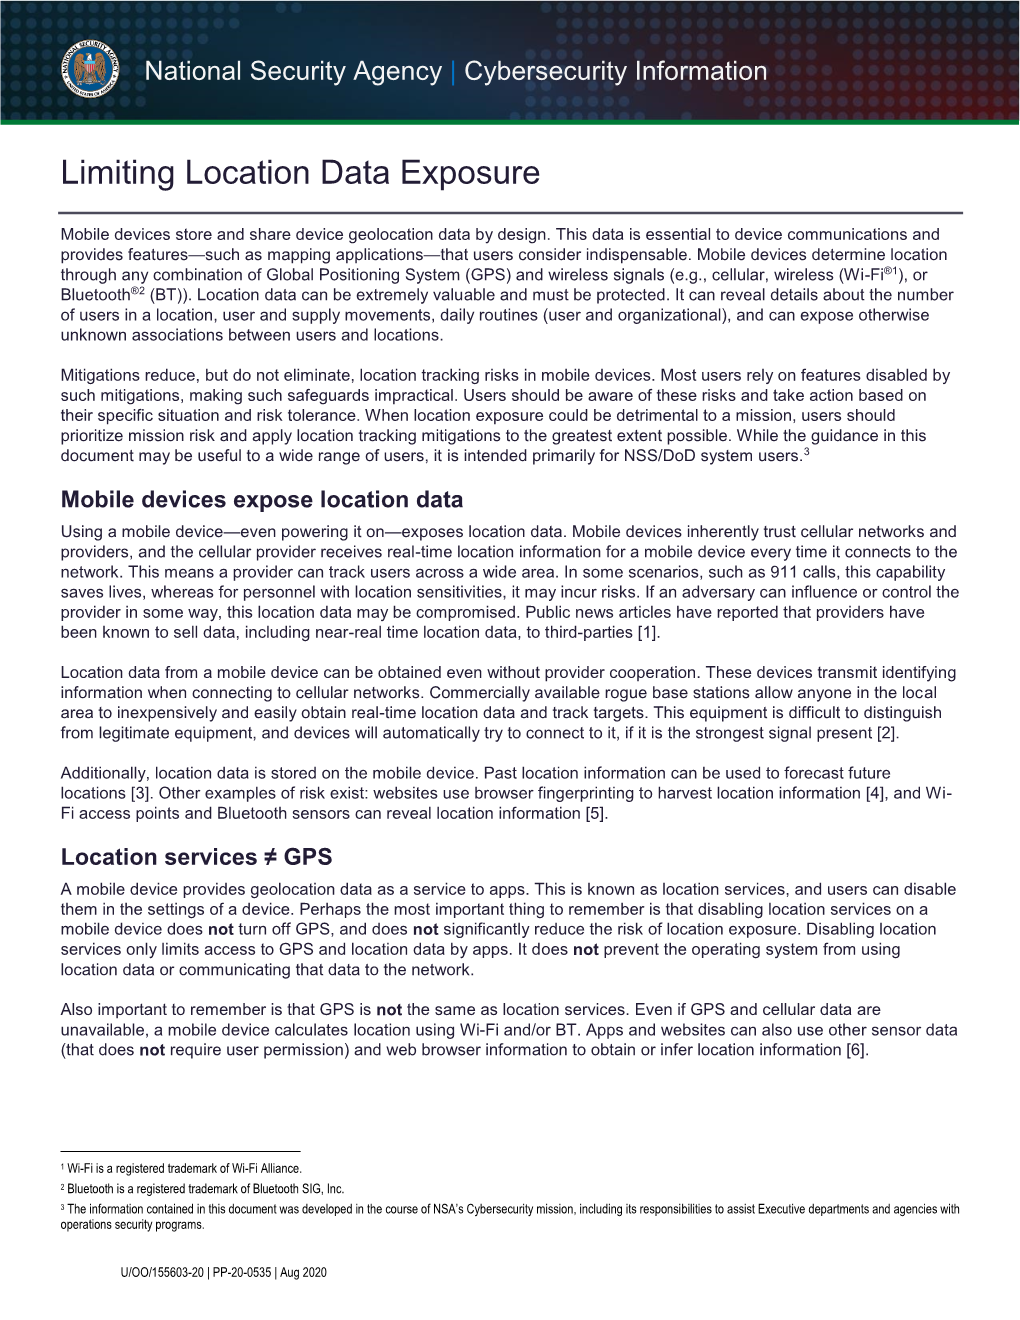 NSA: Limiting Location Data Exposure